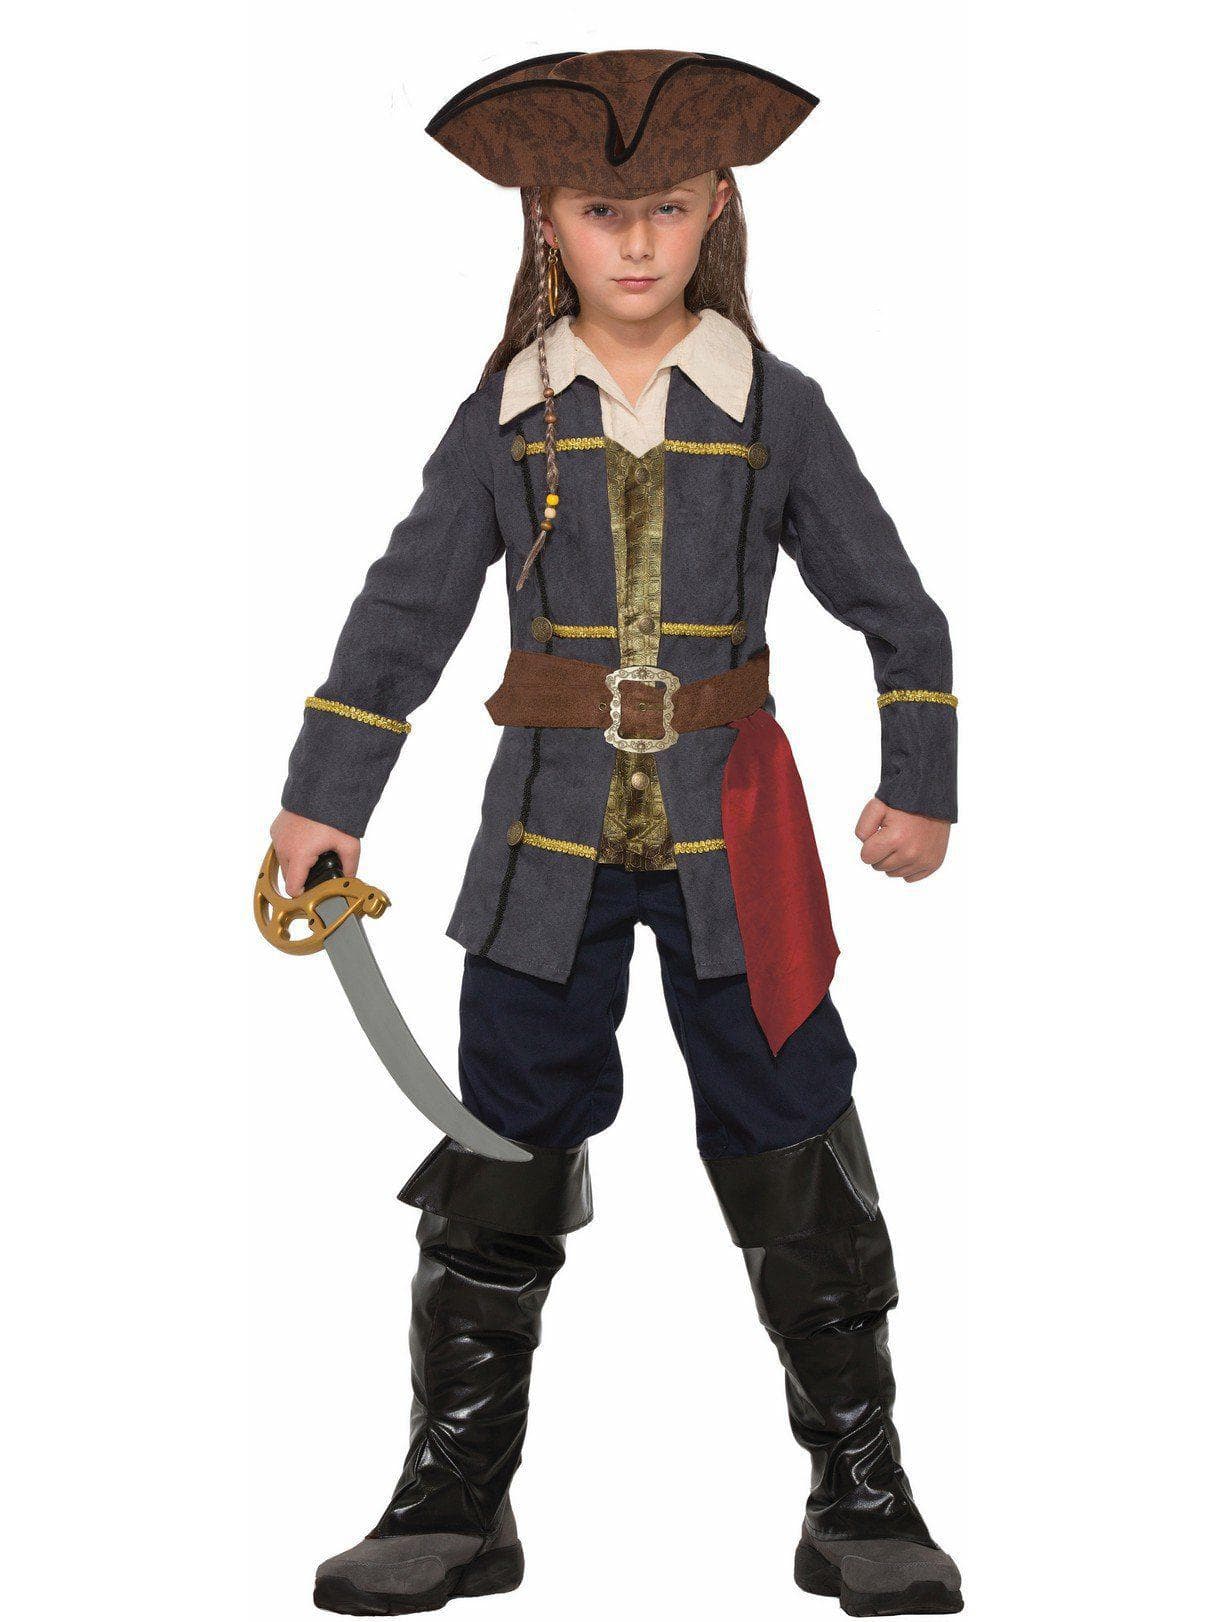 Kid's Captain Cutlass Pirate Costume - costumes.com